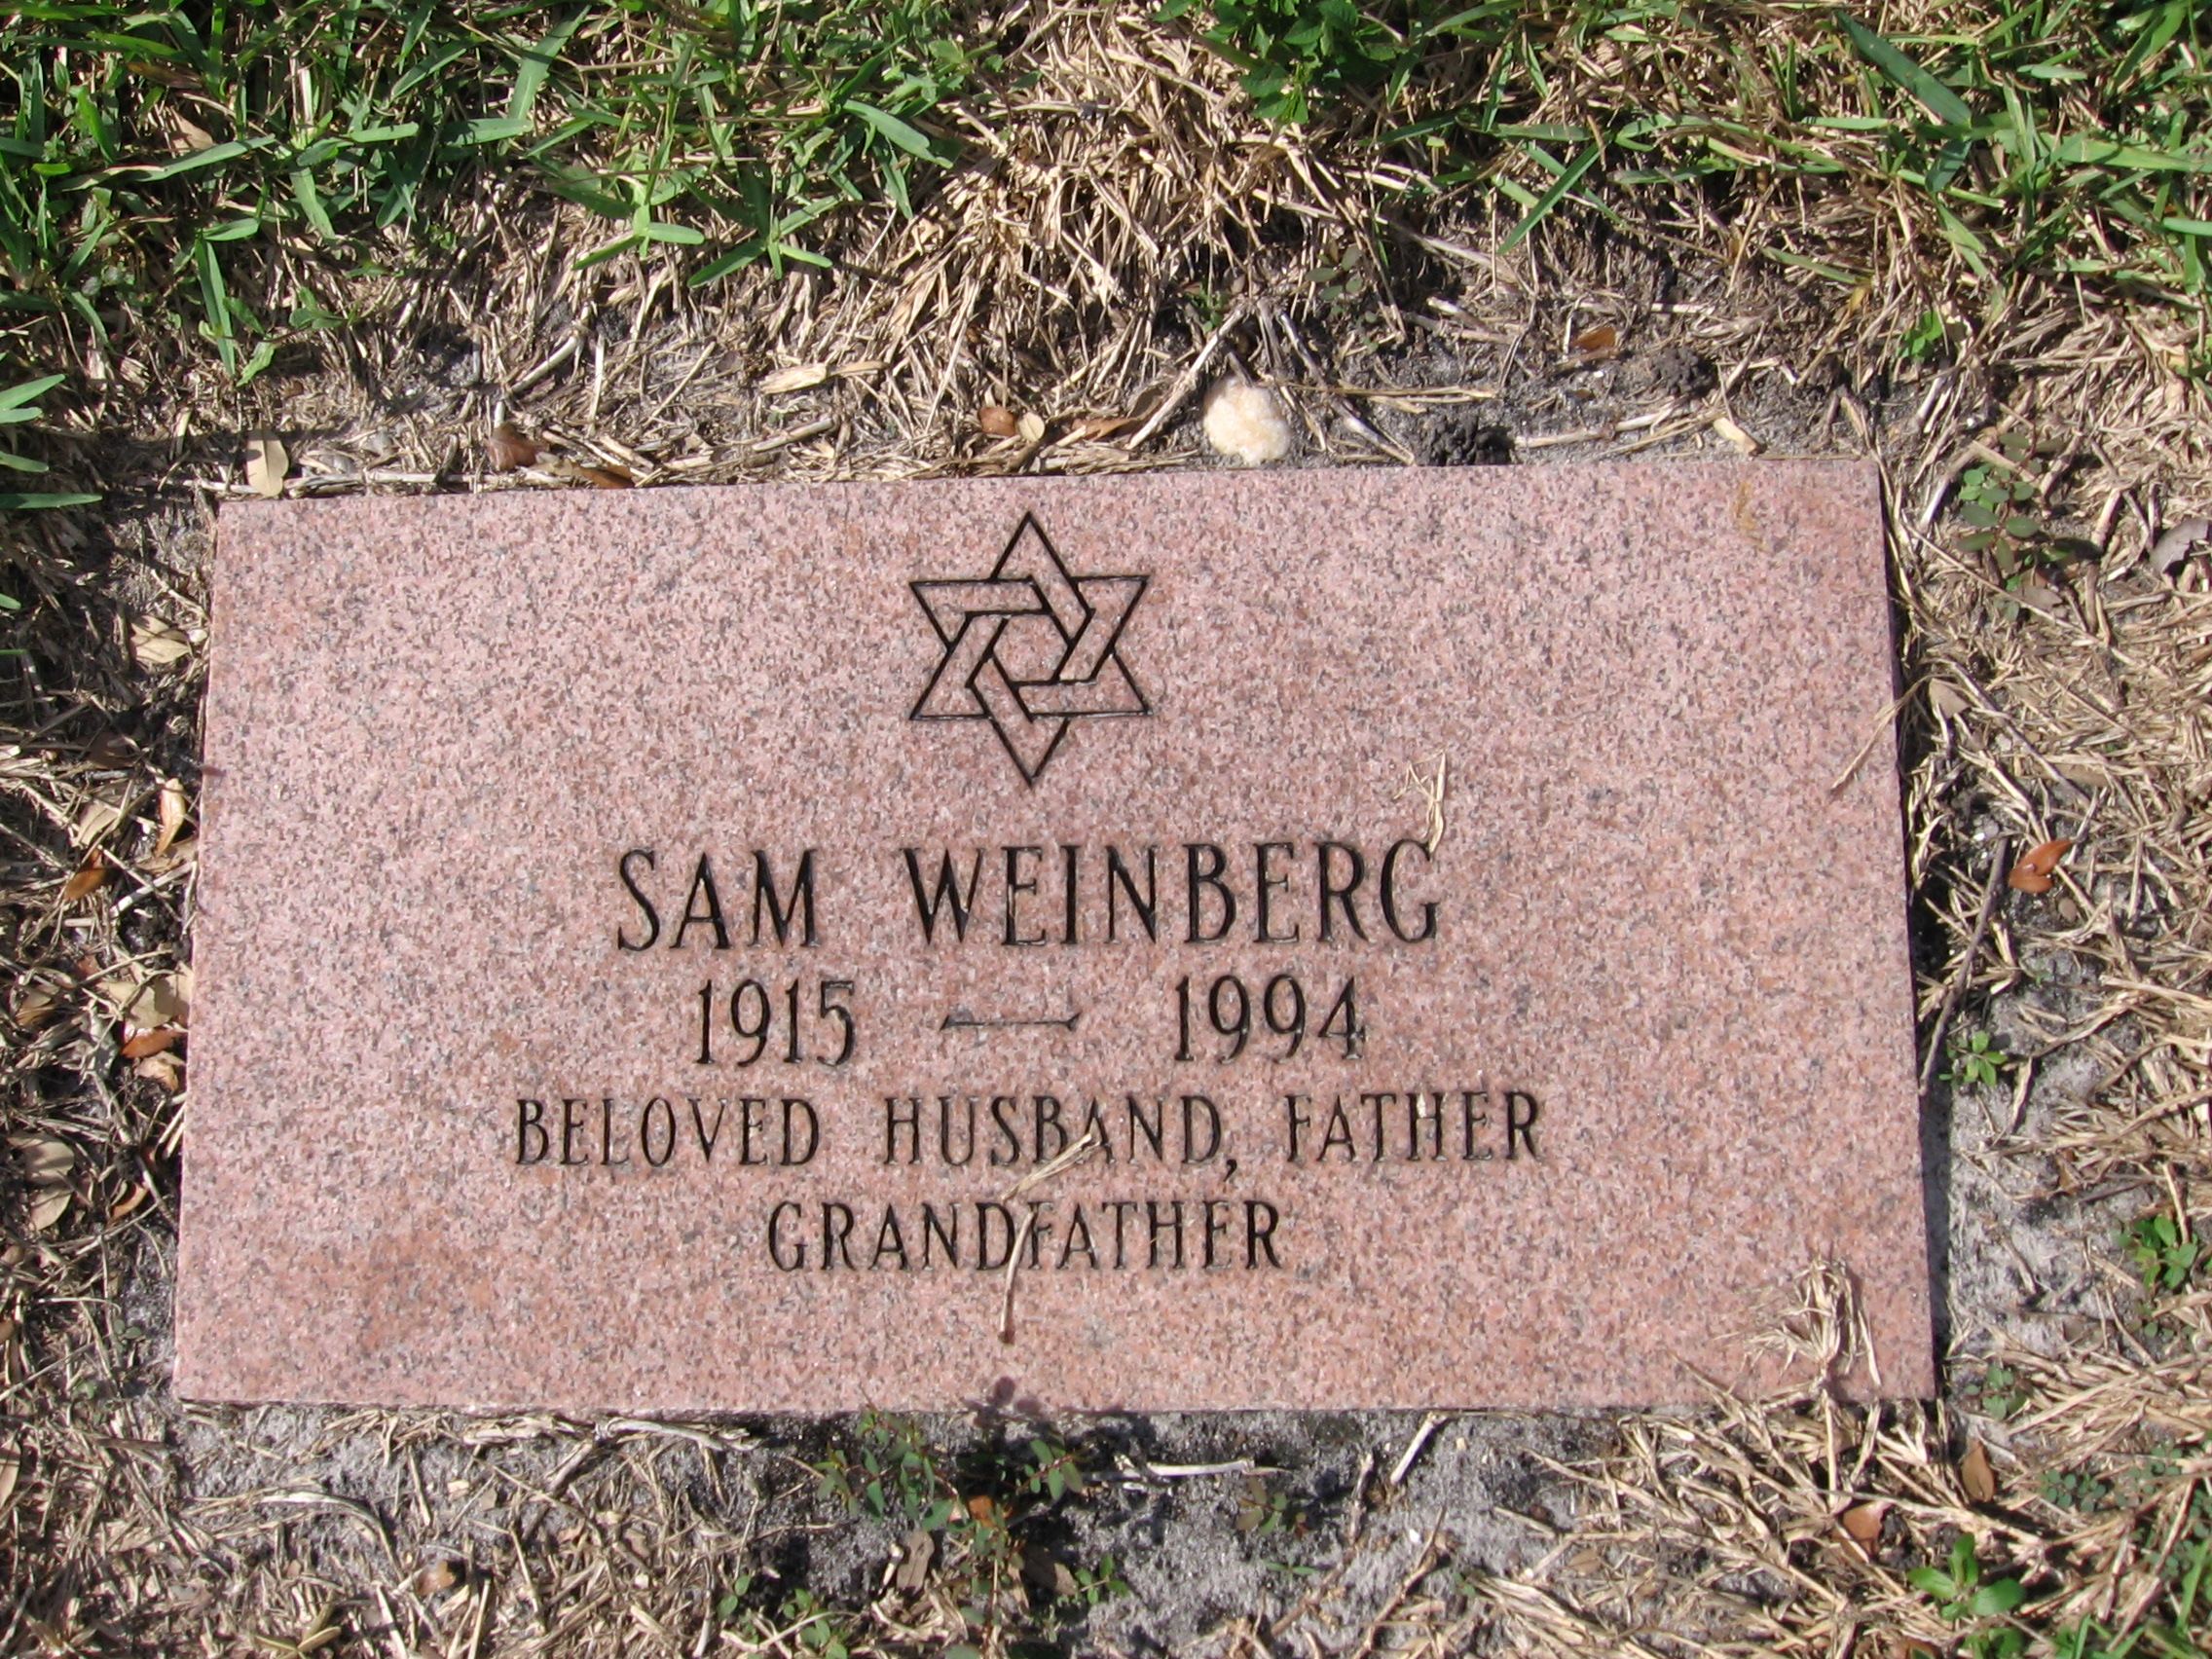 Sam Weinberg